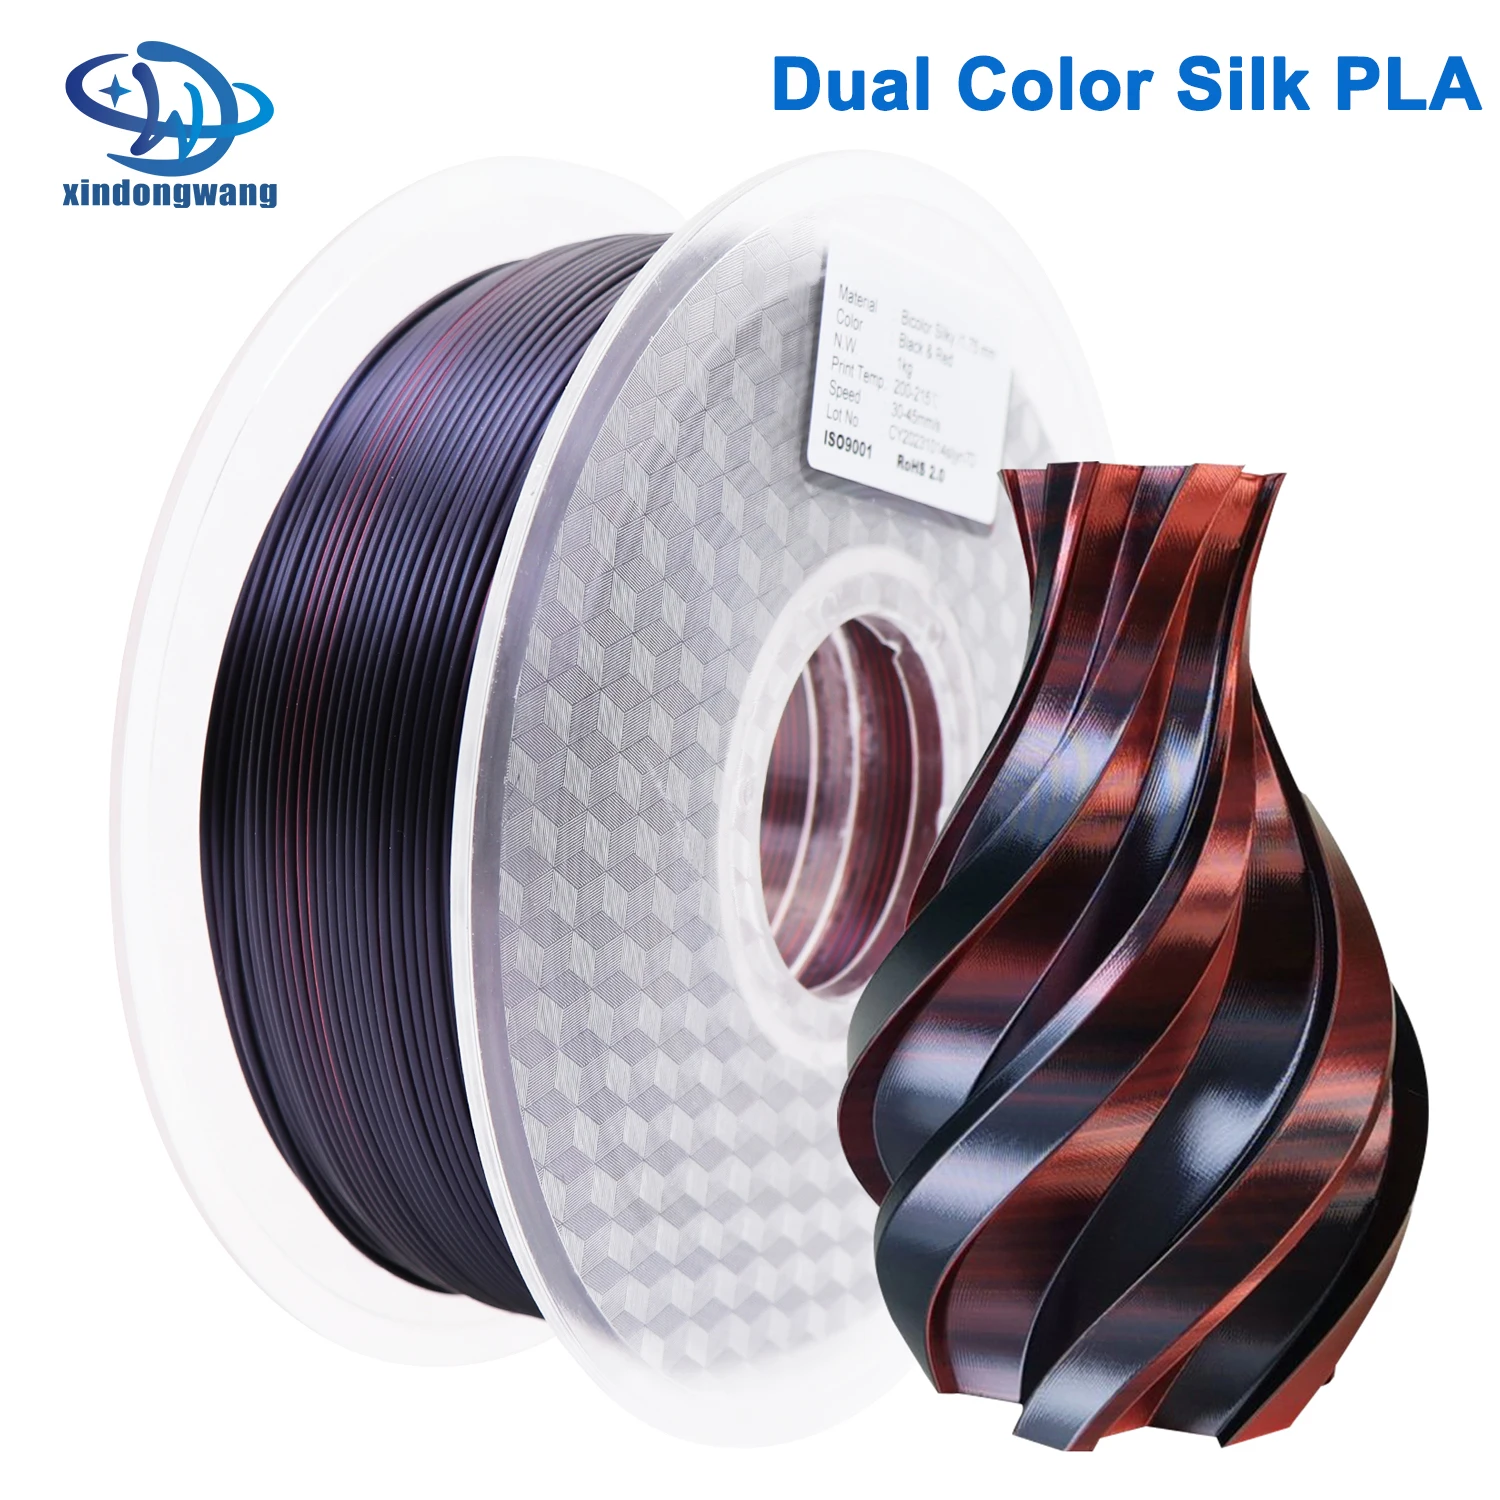 

New Dual-Color Silk PLA Filament Two Color 1.75mm 1KG High Quality Plastic For 3D Printing FDM Printer